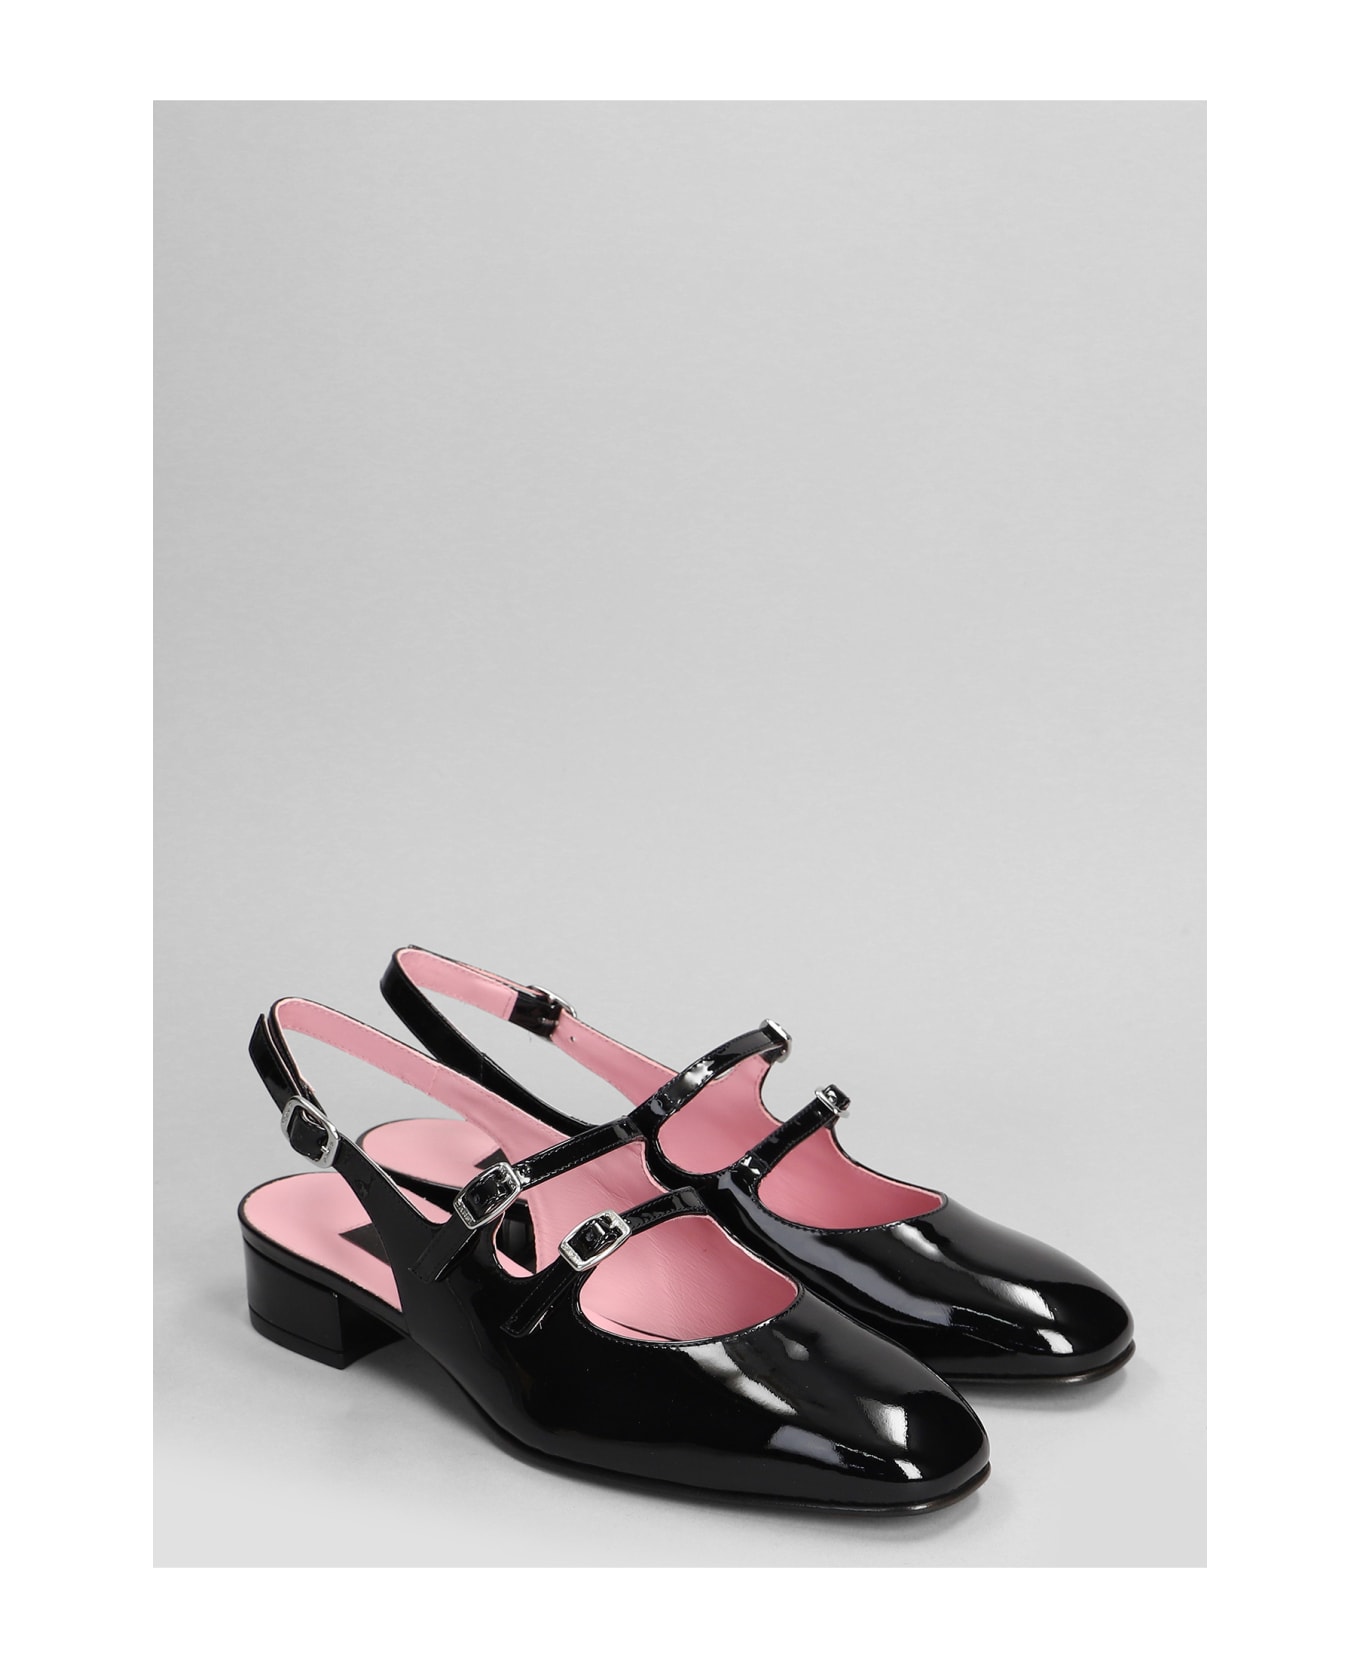 Carel Peche Ballet Flats In Black Patent Leather - black